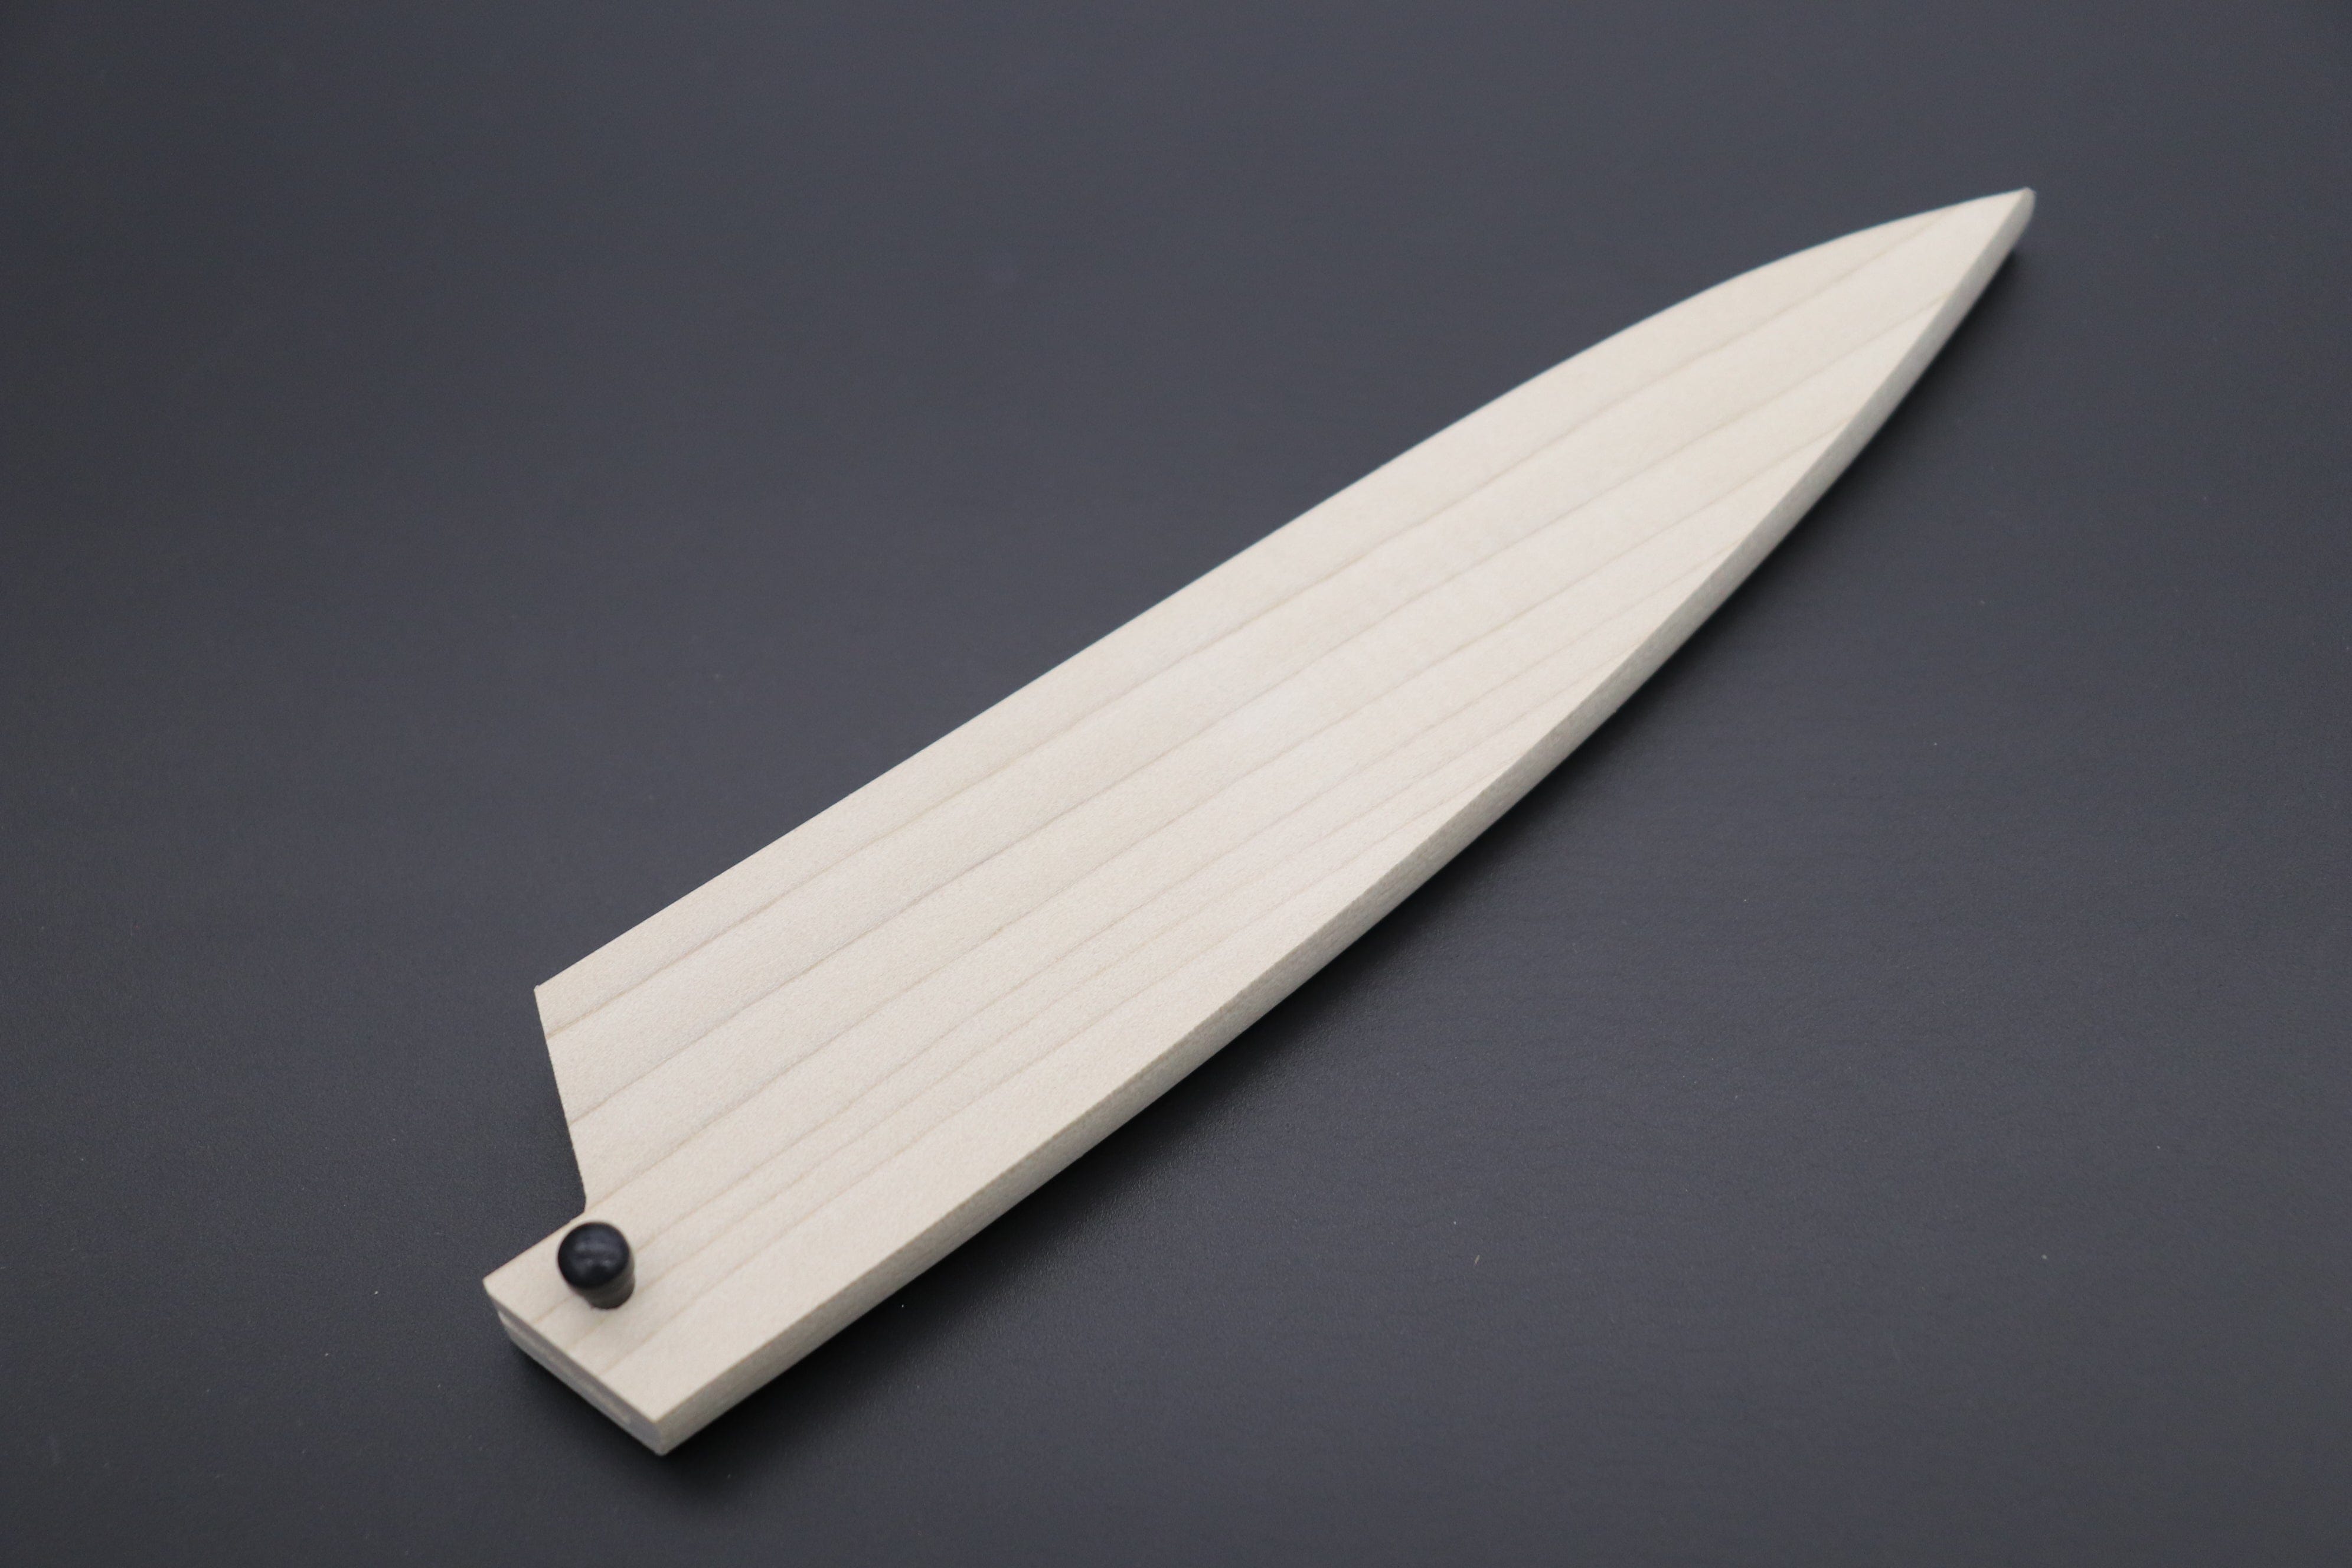 How to Make a Wooden Knife Sheath – Mortise & Tenon Magazine